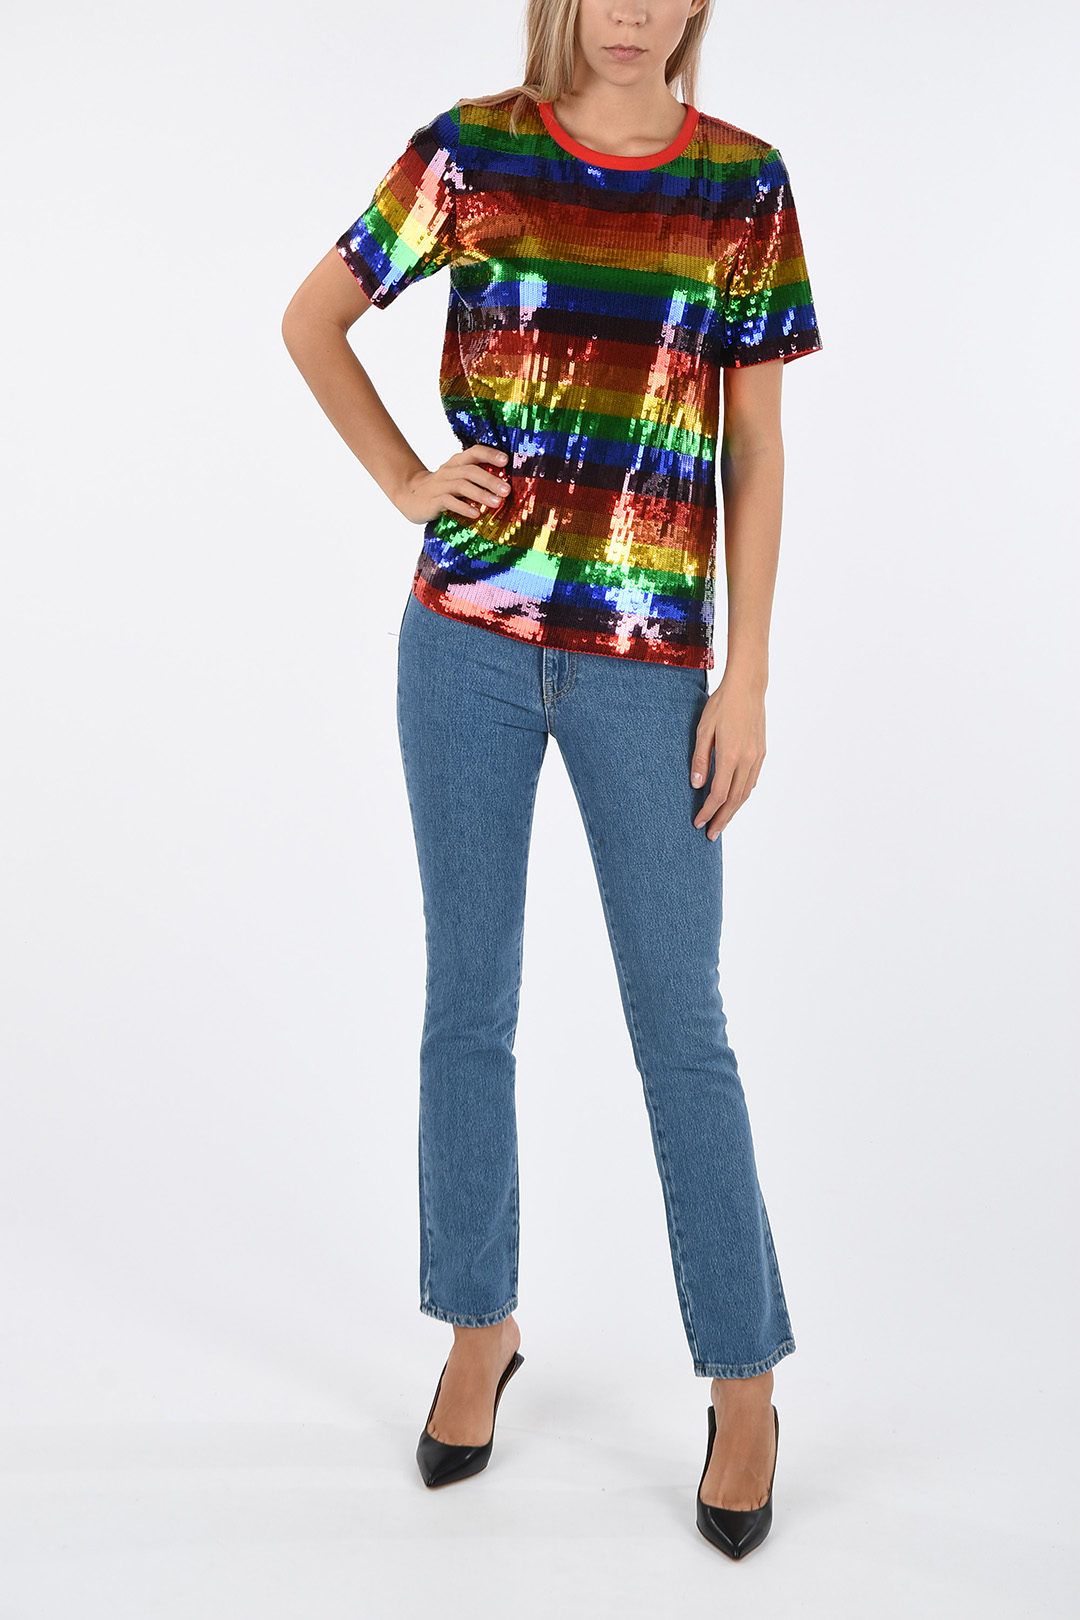 Michael Kors Sequined RAINBOW T-shirt women - Glamood Outlet